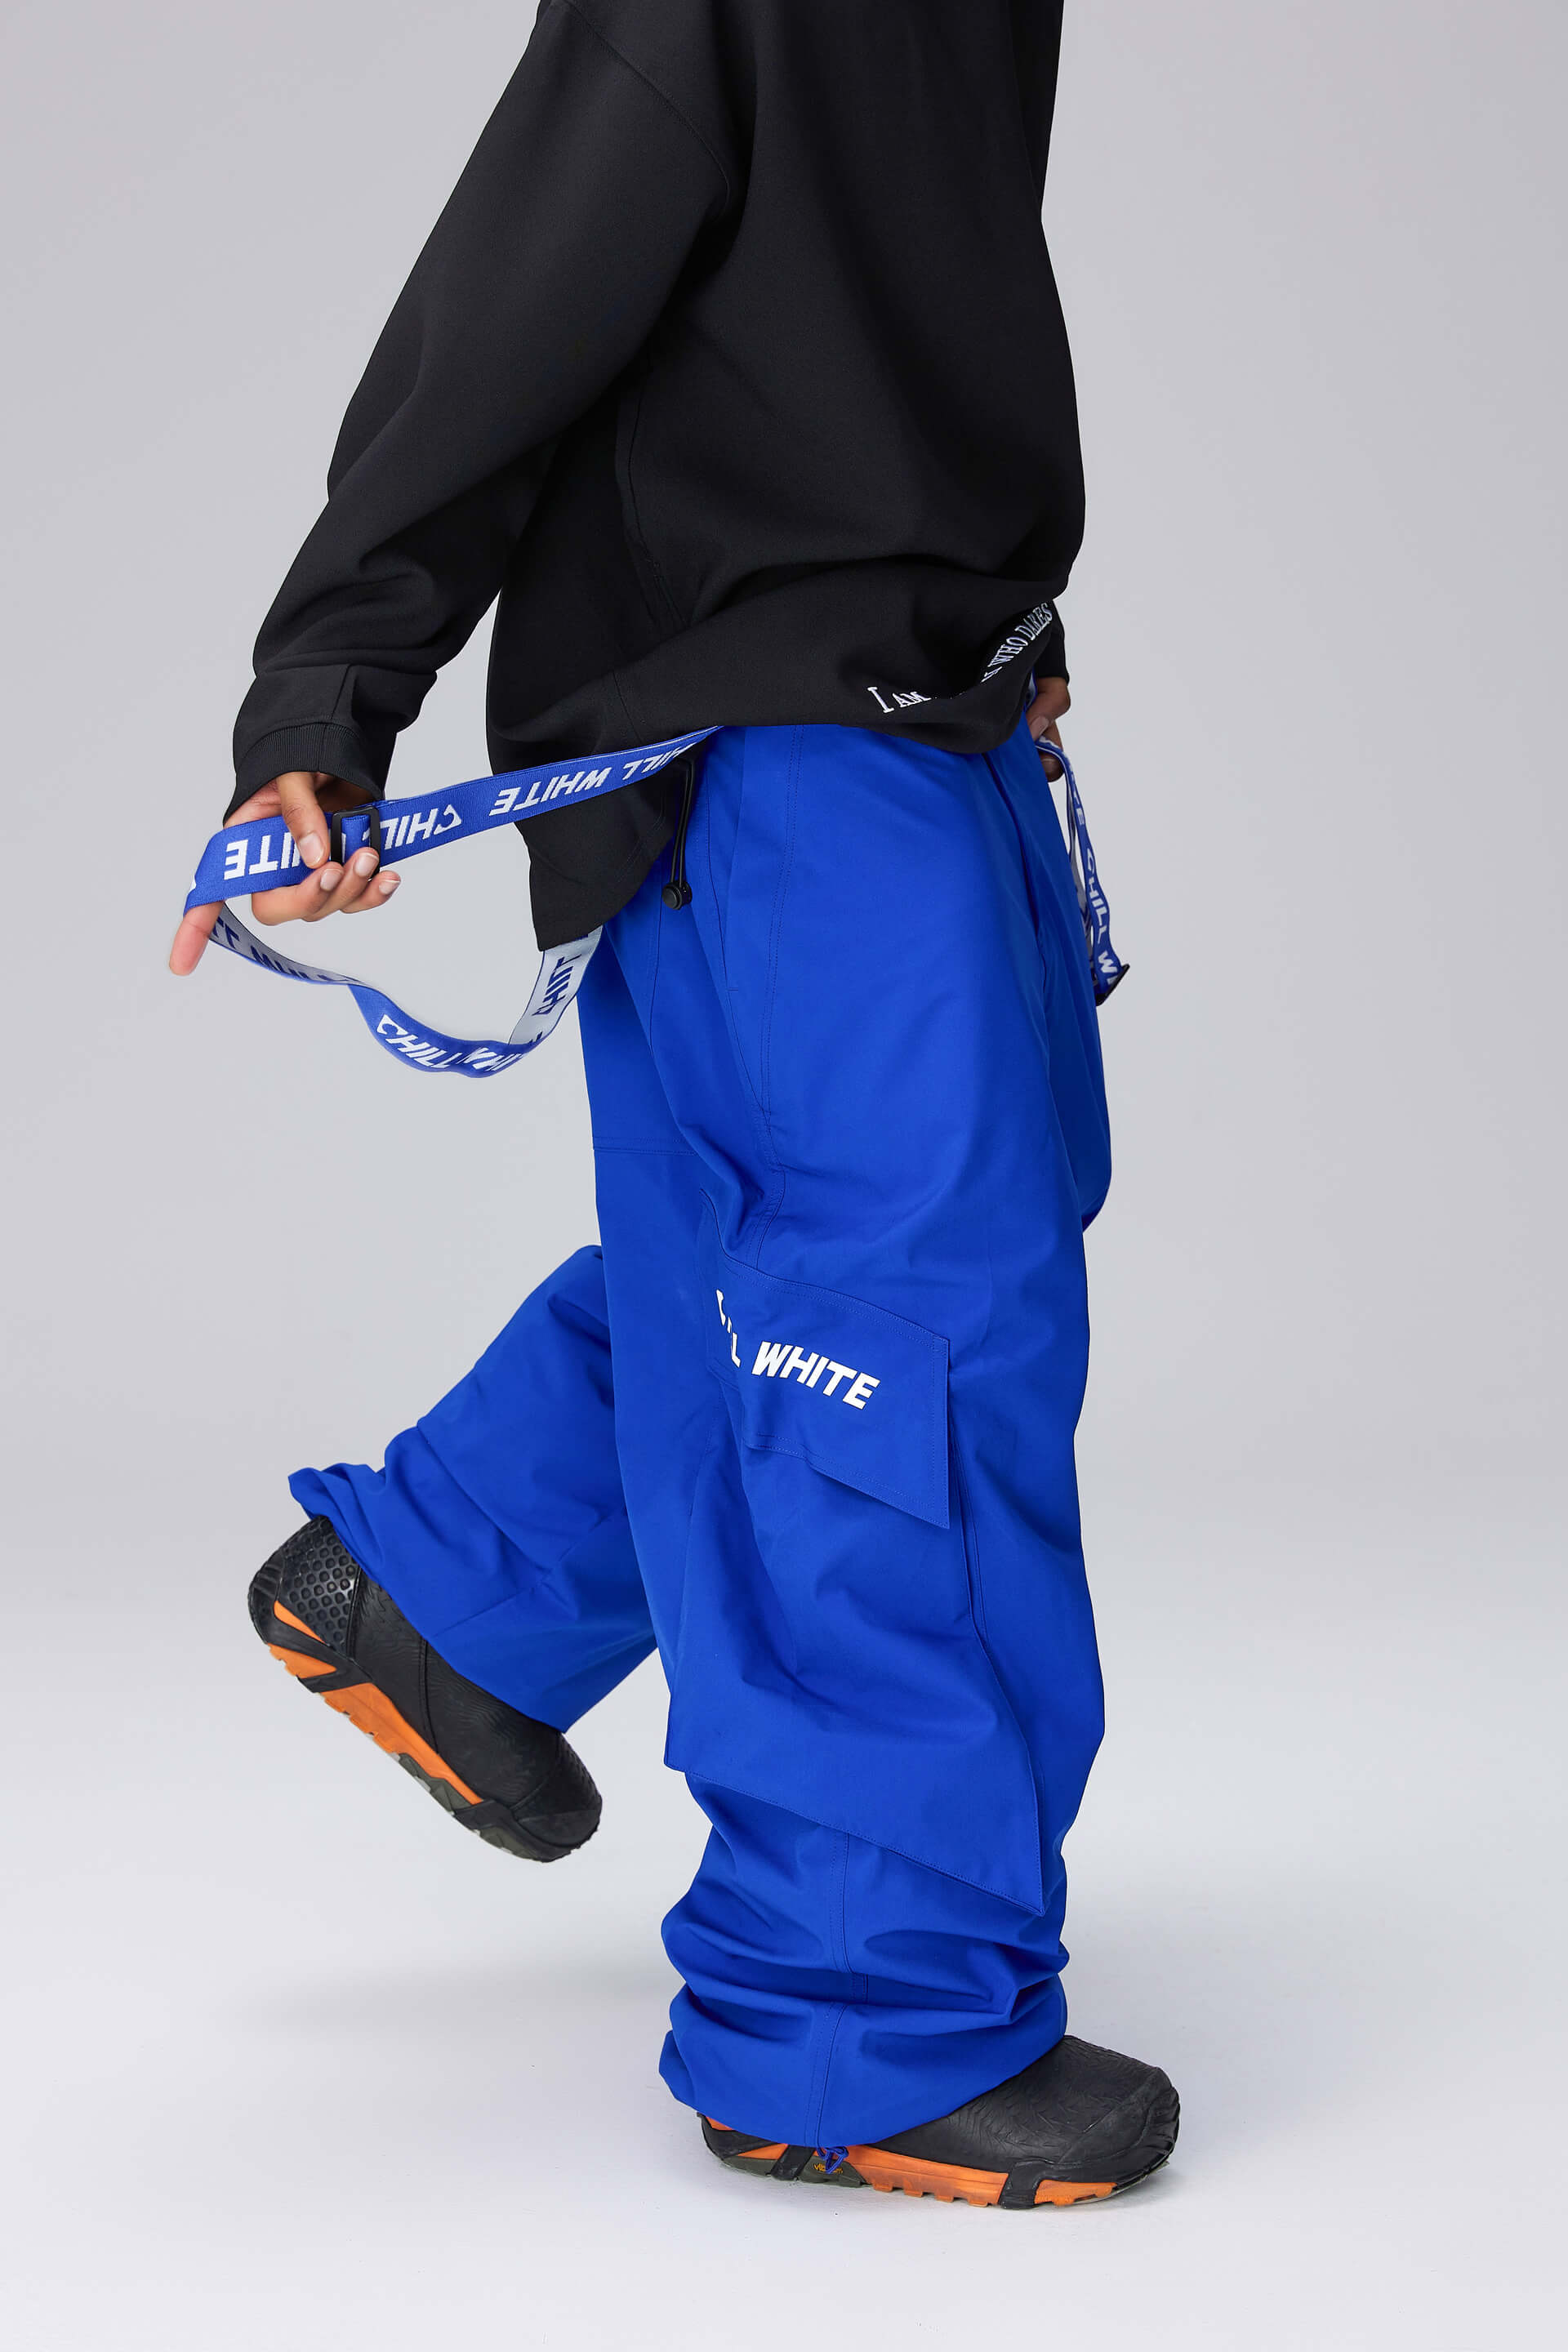 Unisex Klein Blue Snow Jacket & Pants